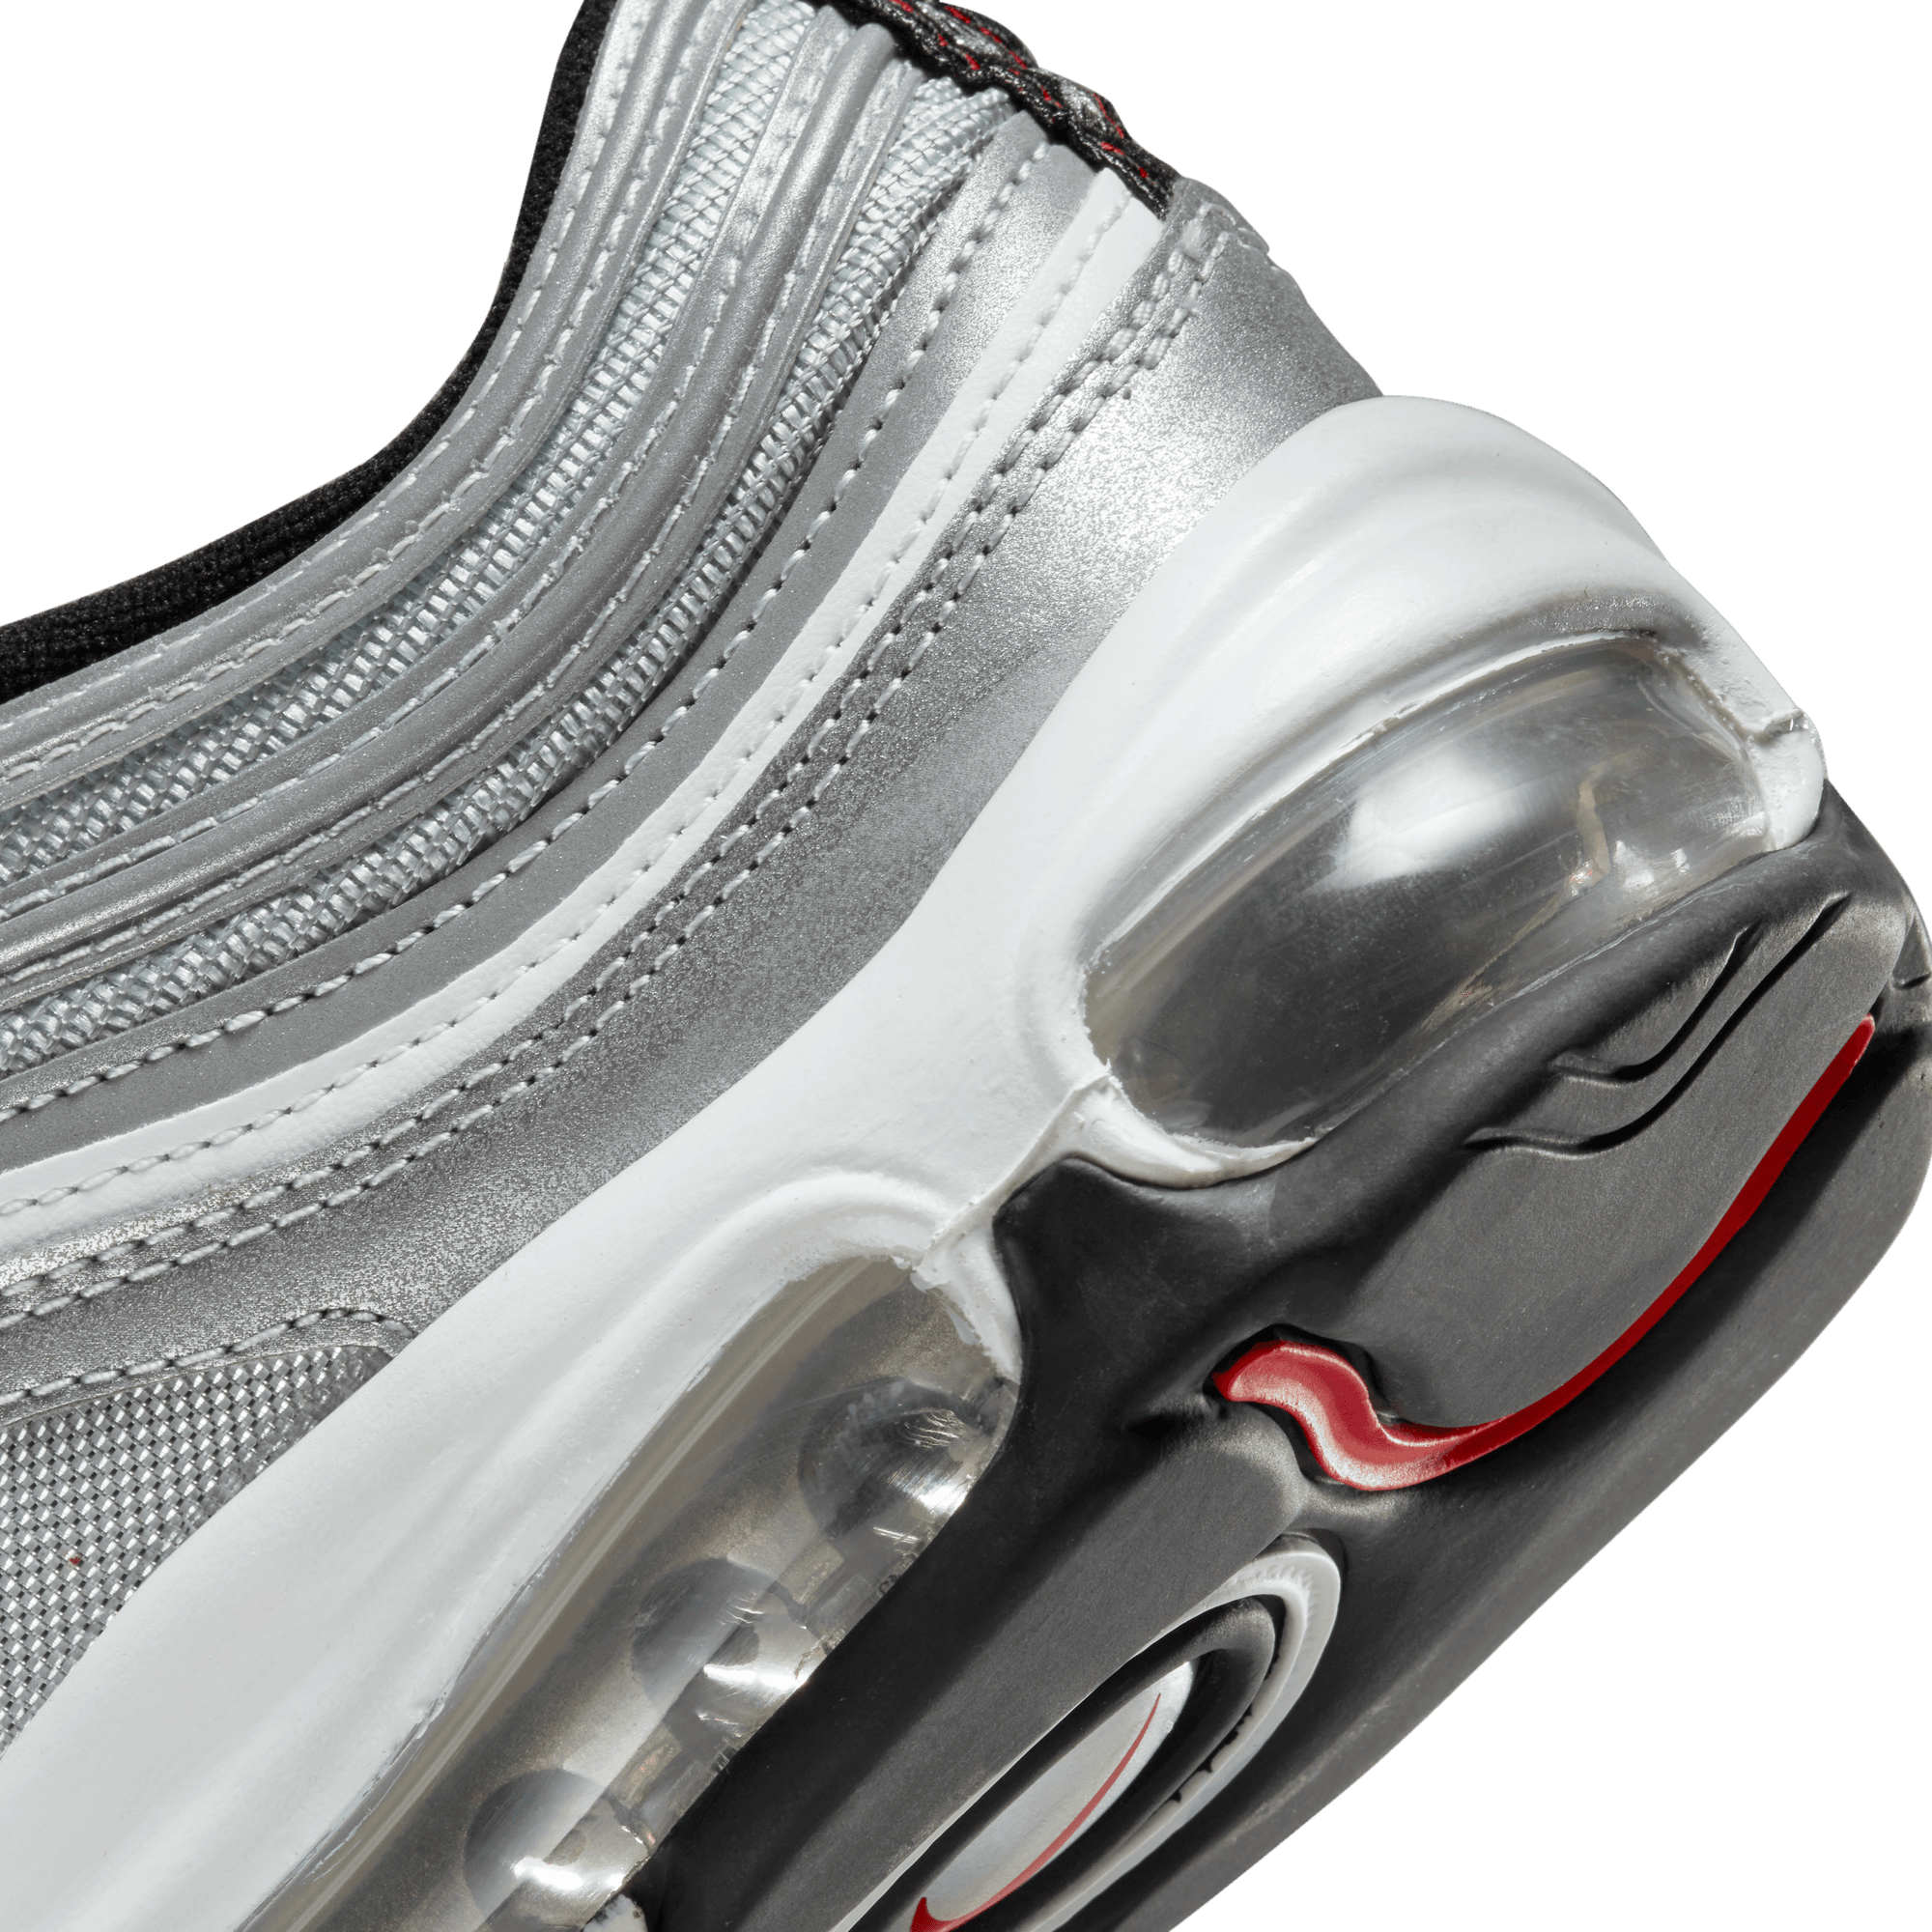 Nike Footwear Nike Air Max 97 - Women's